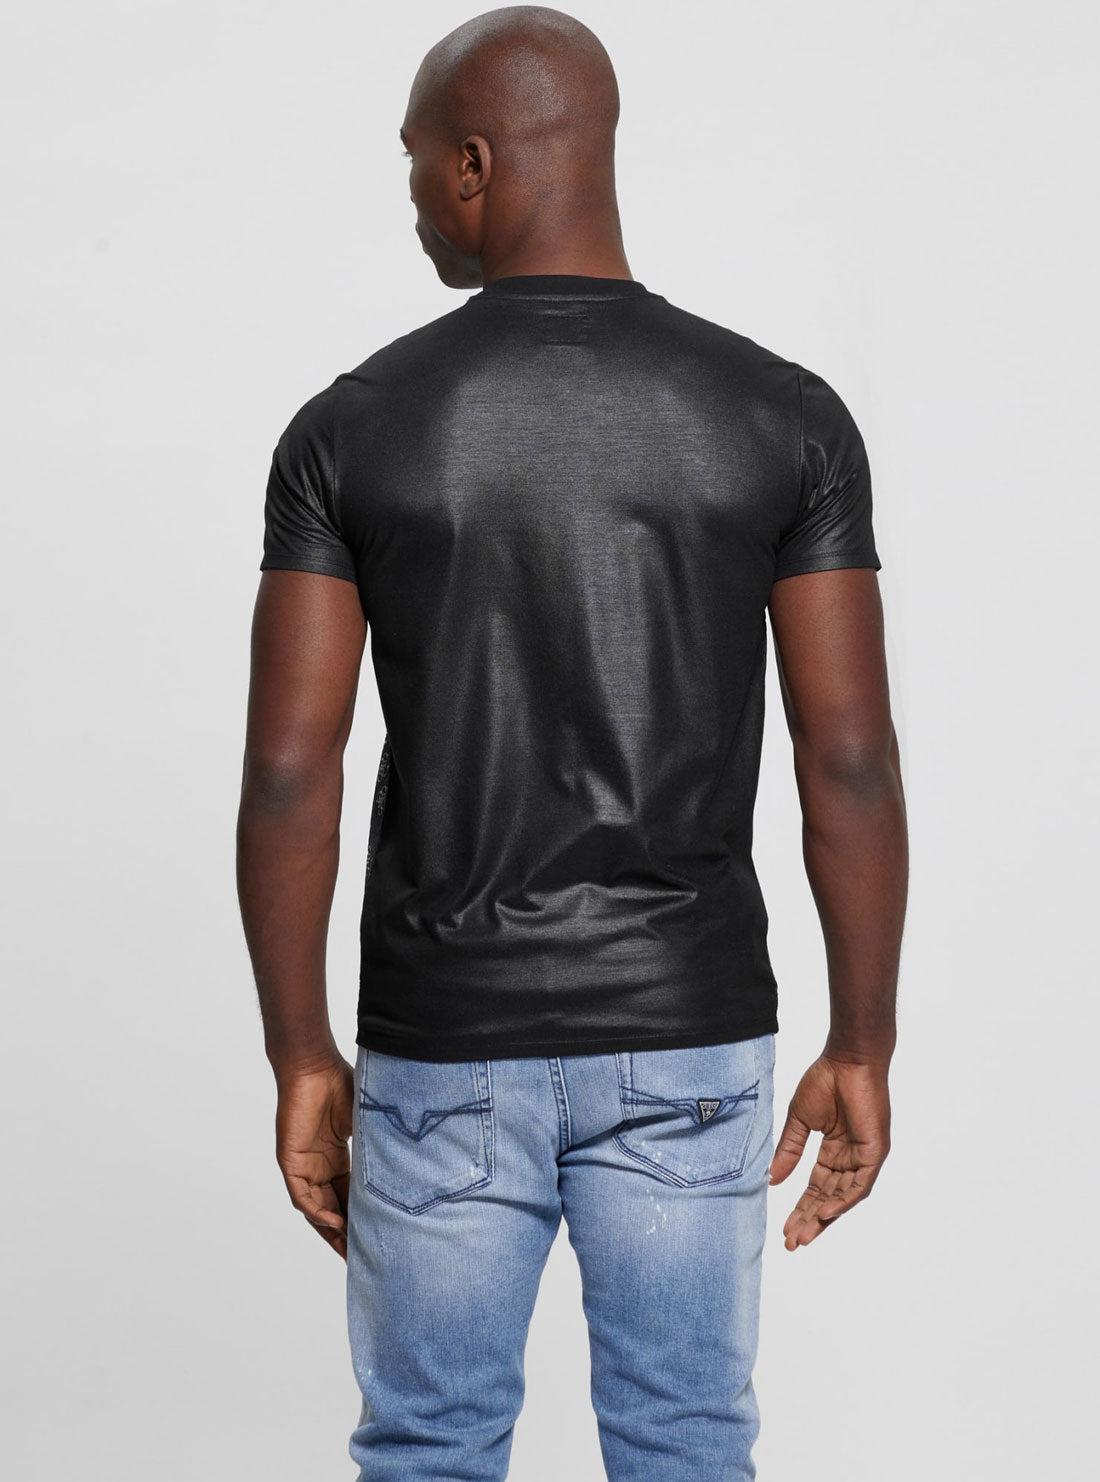 GUESS Black Short Sleeves Logo T-Shirt back view